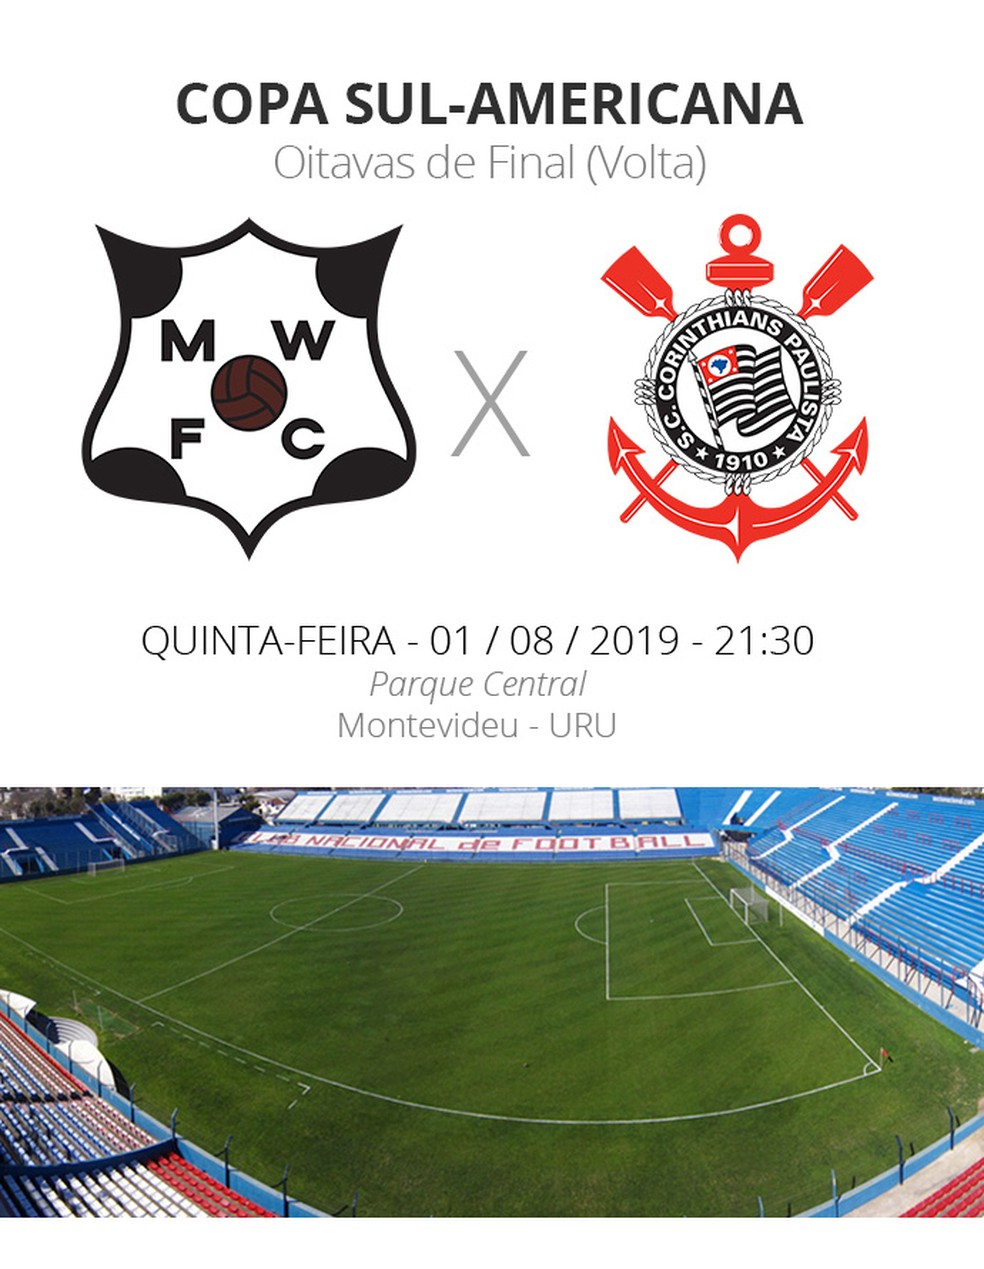 Montevideo Wanderers-URU x Corinthians – 10 curiosidades